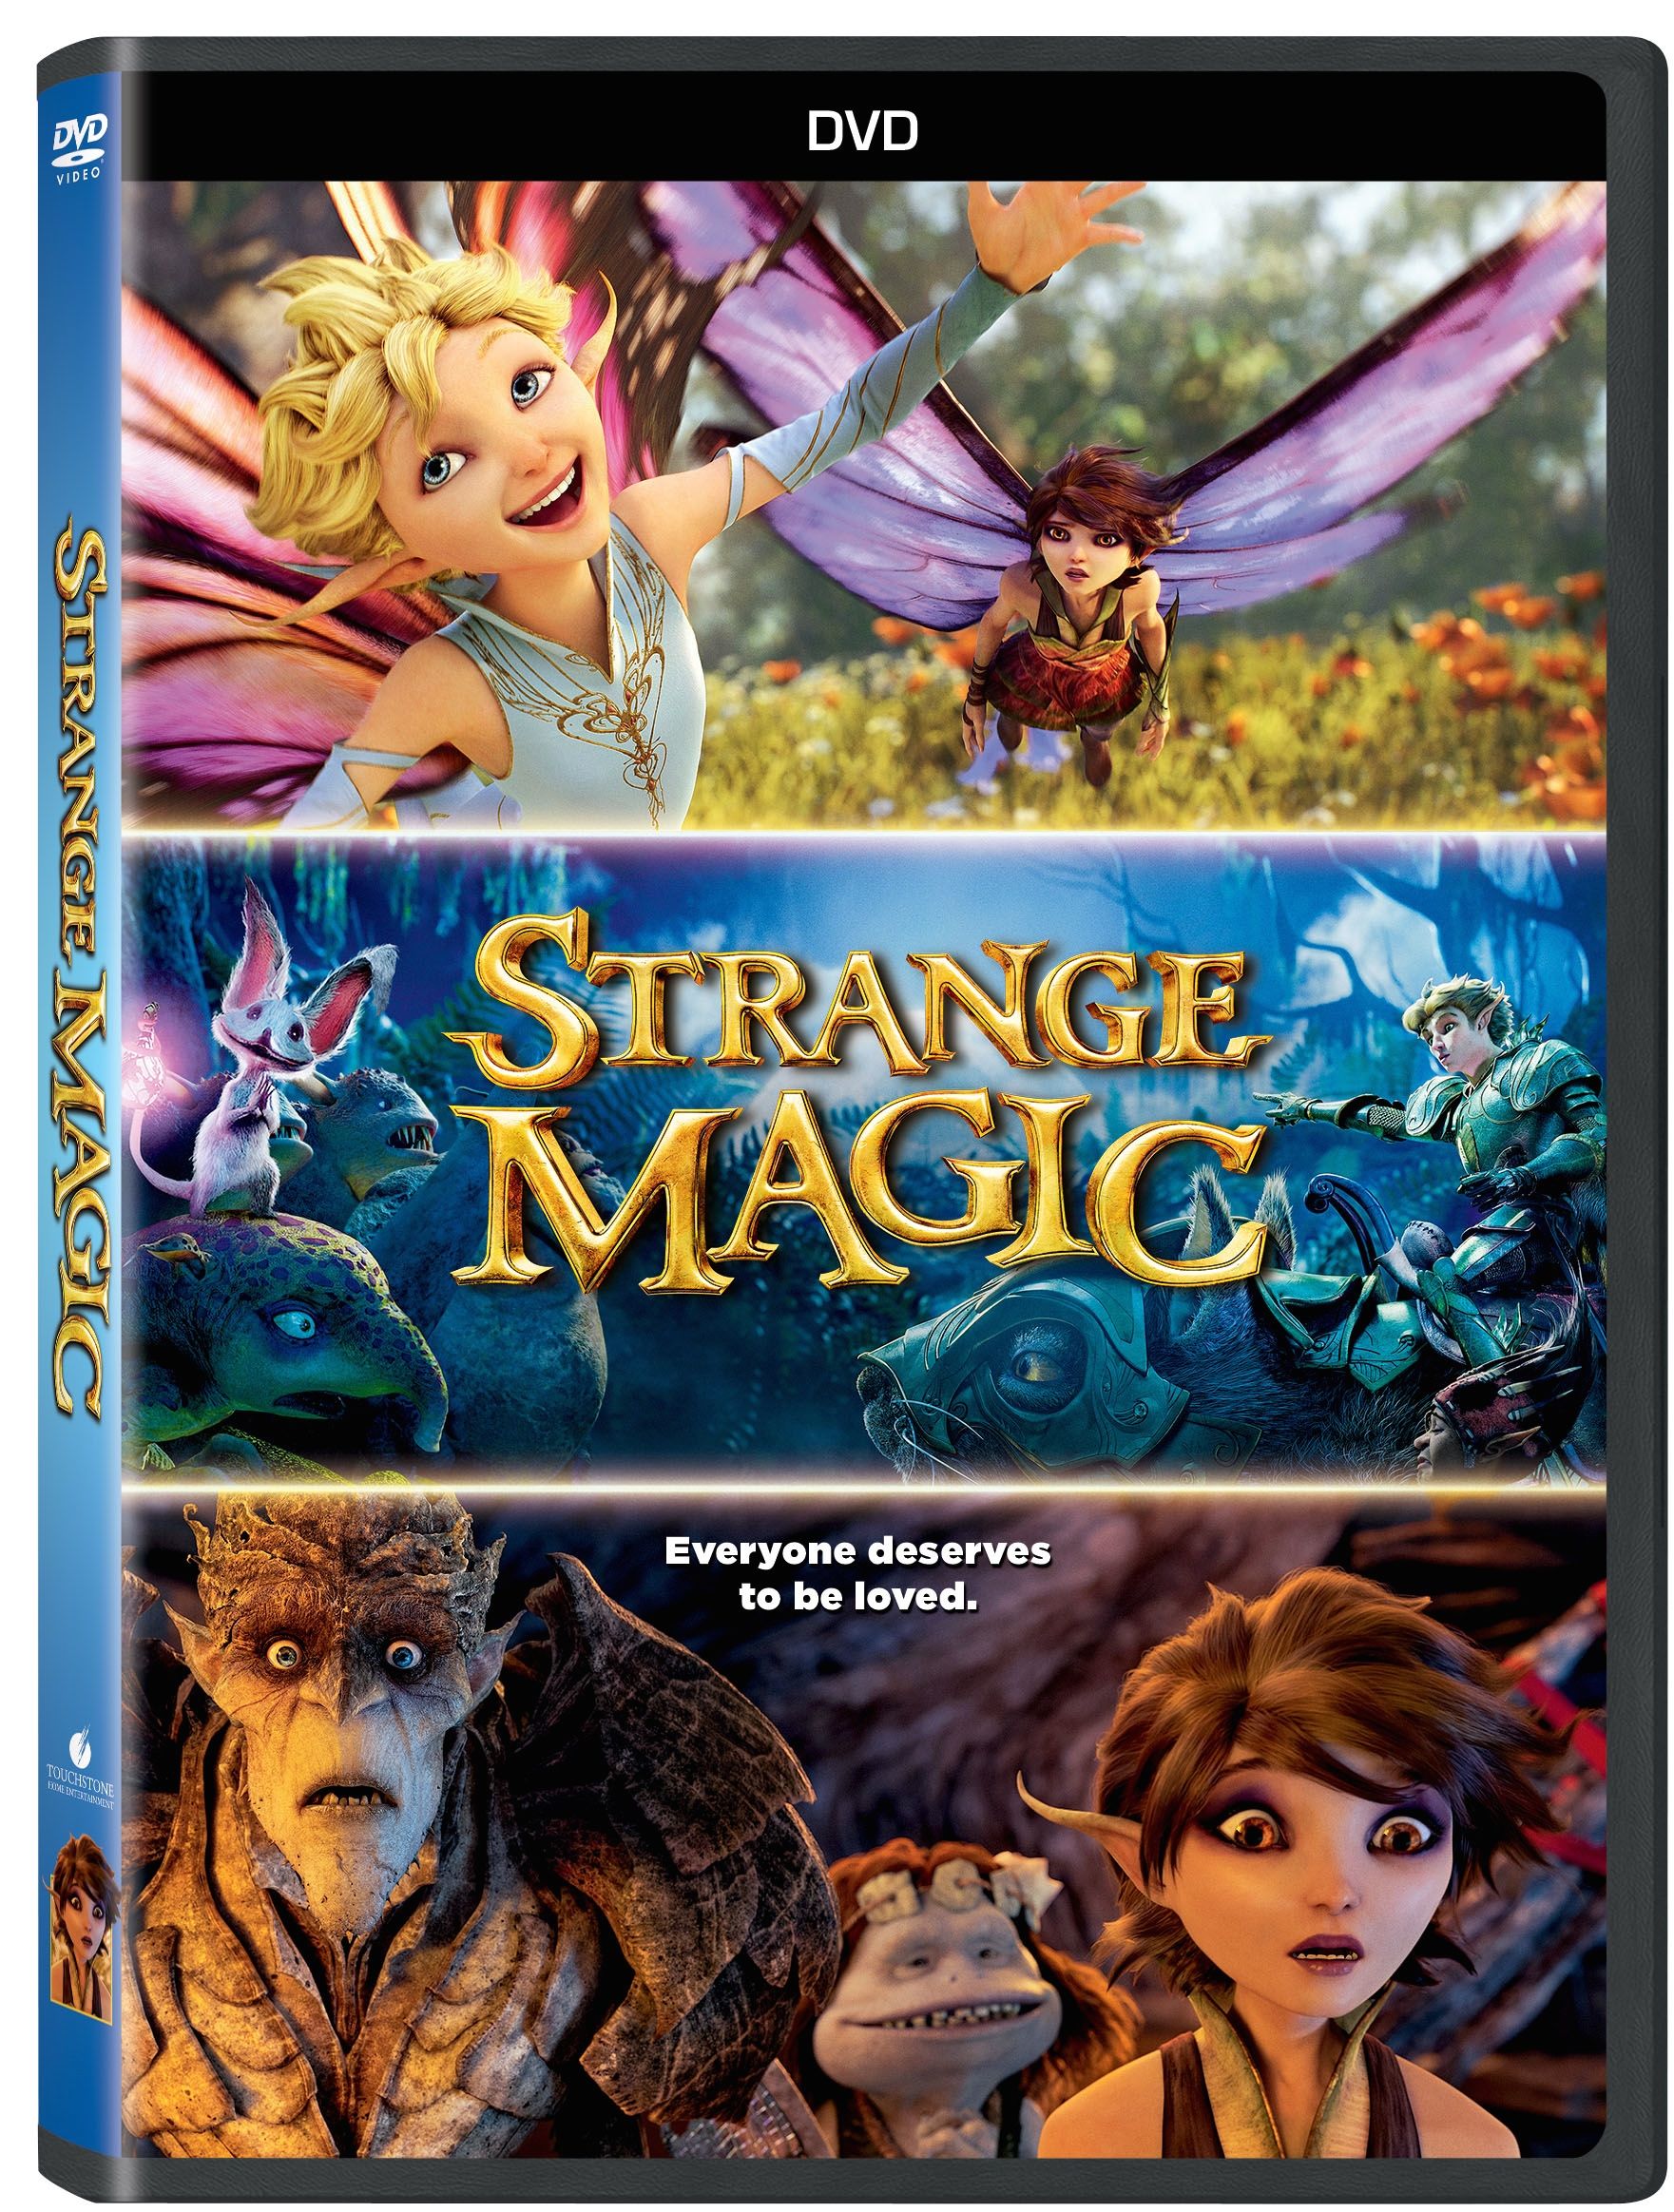 Strange Magic – On DVD and Digital May 19th!